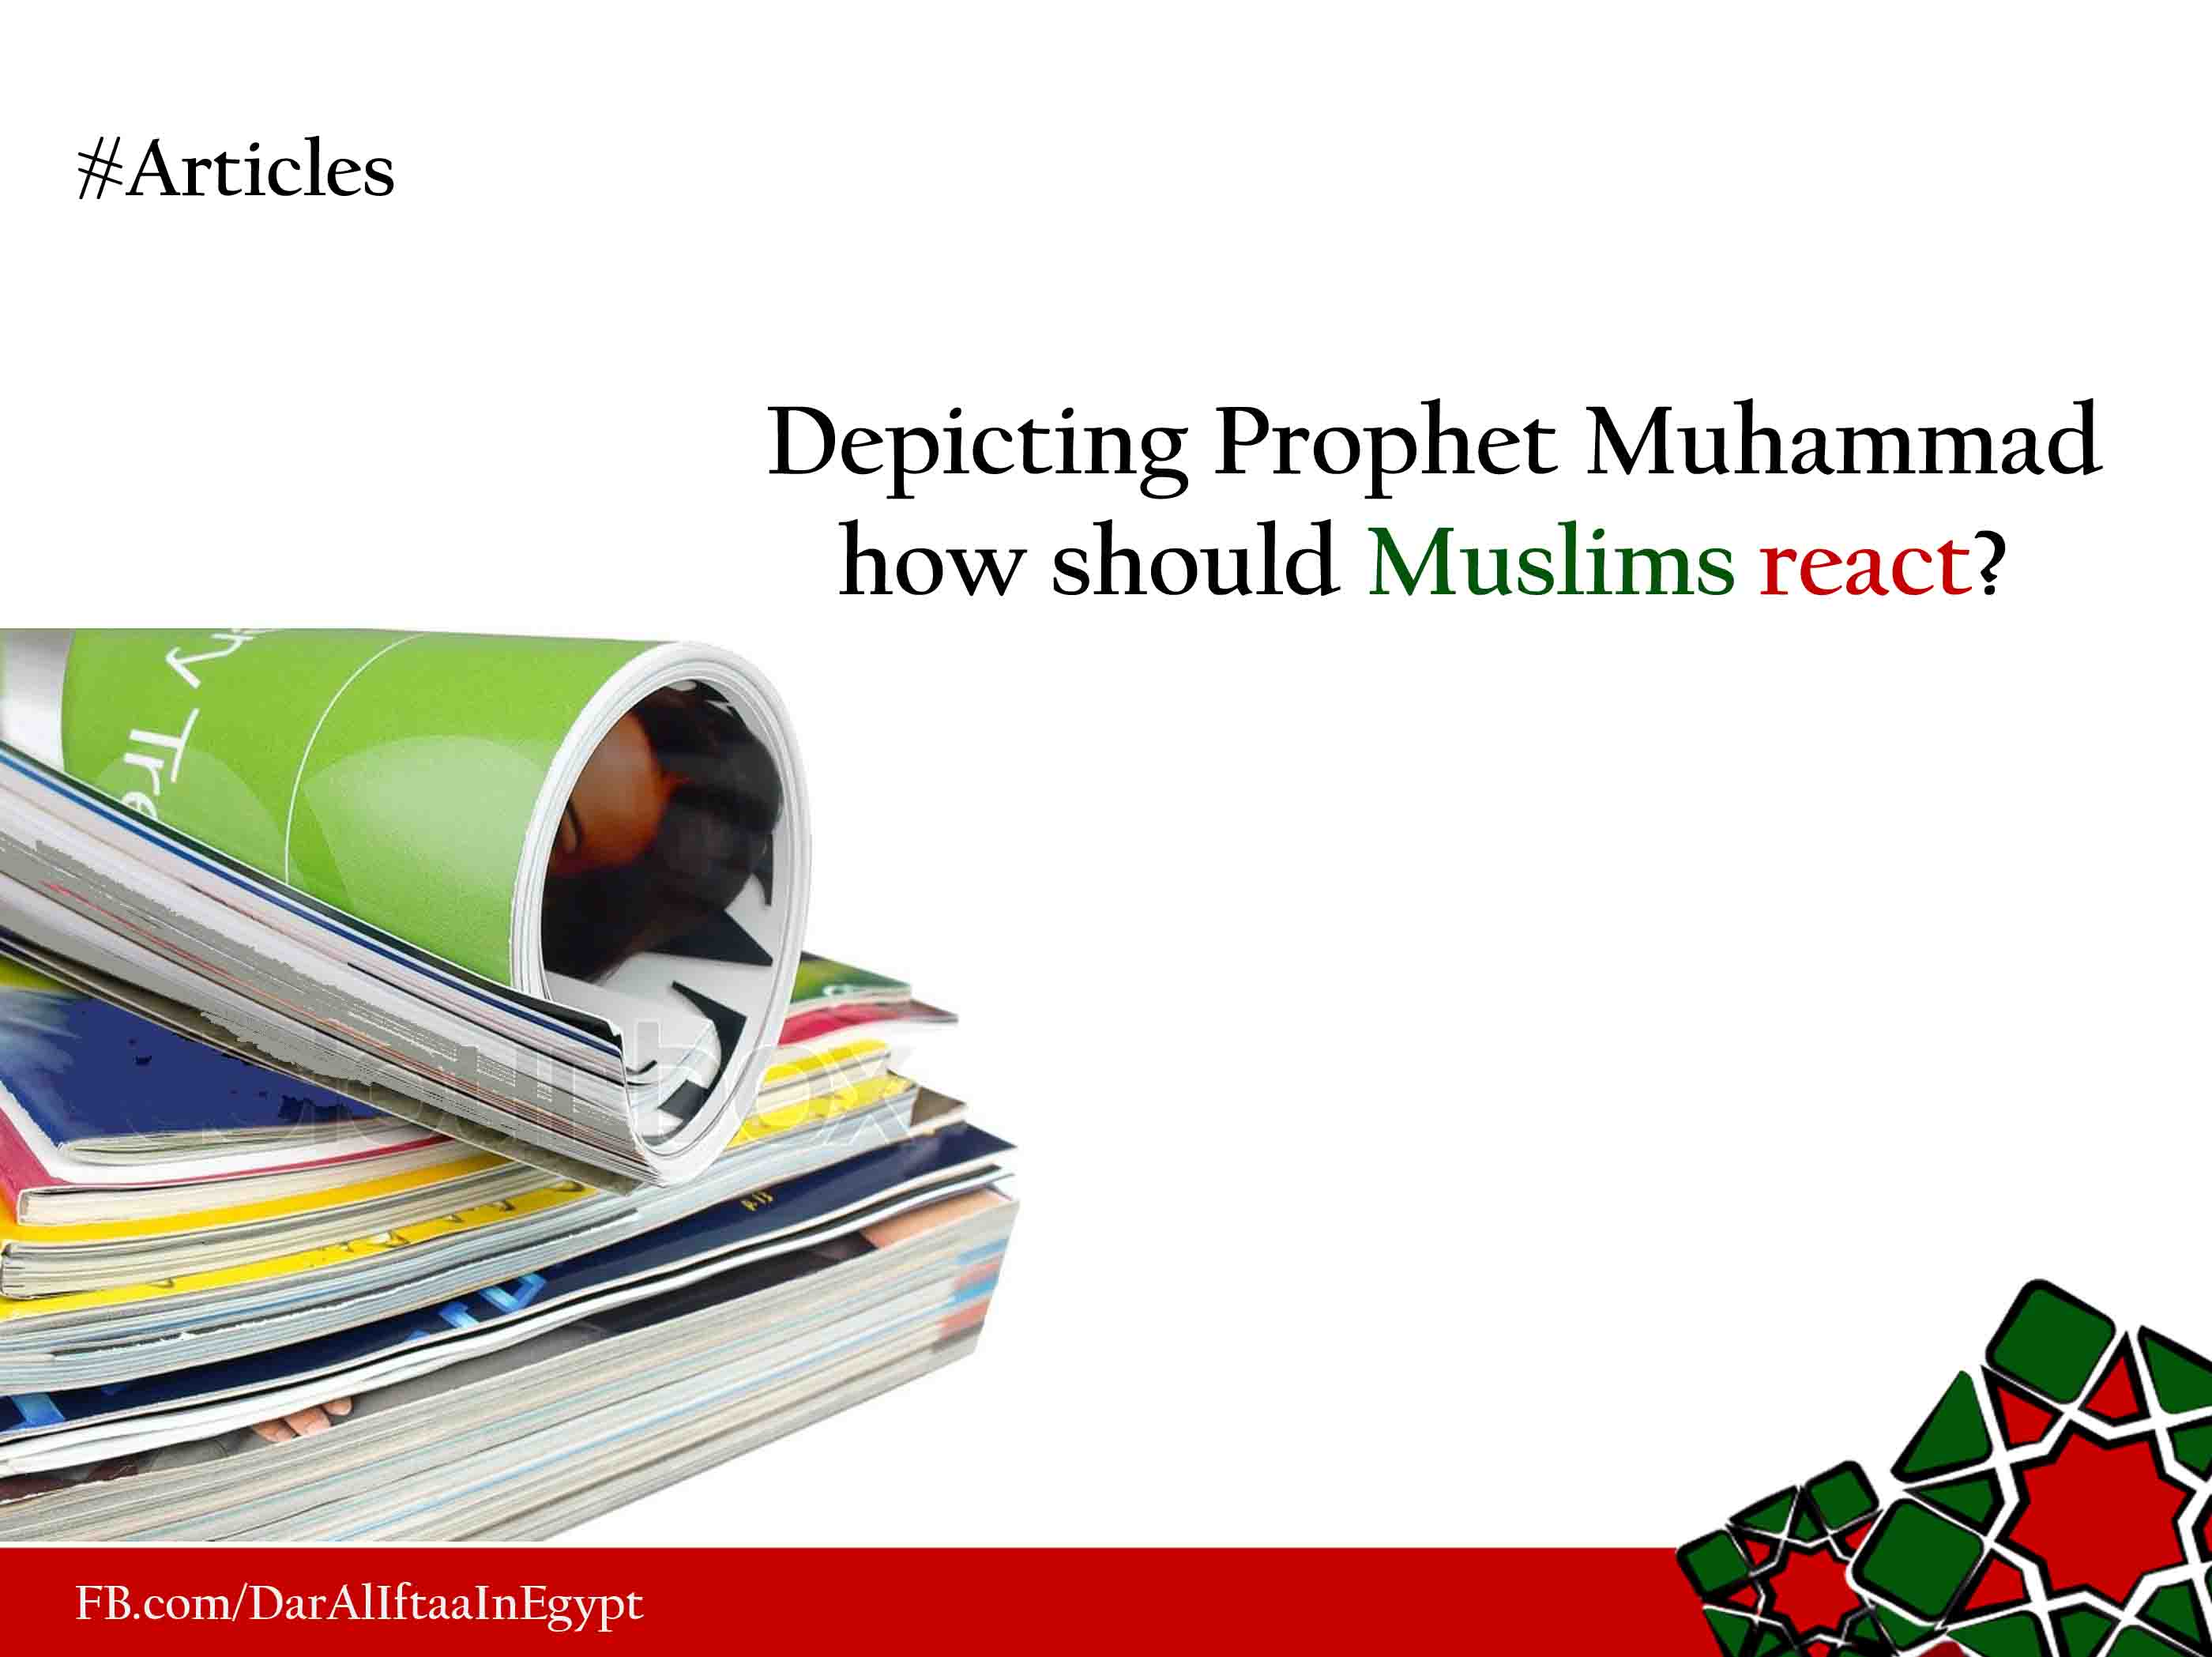 Depicting the Prophet Muhammad